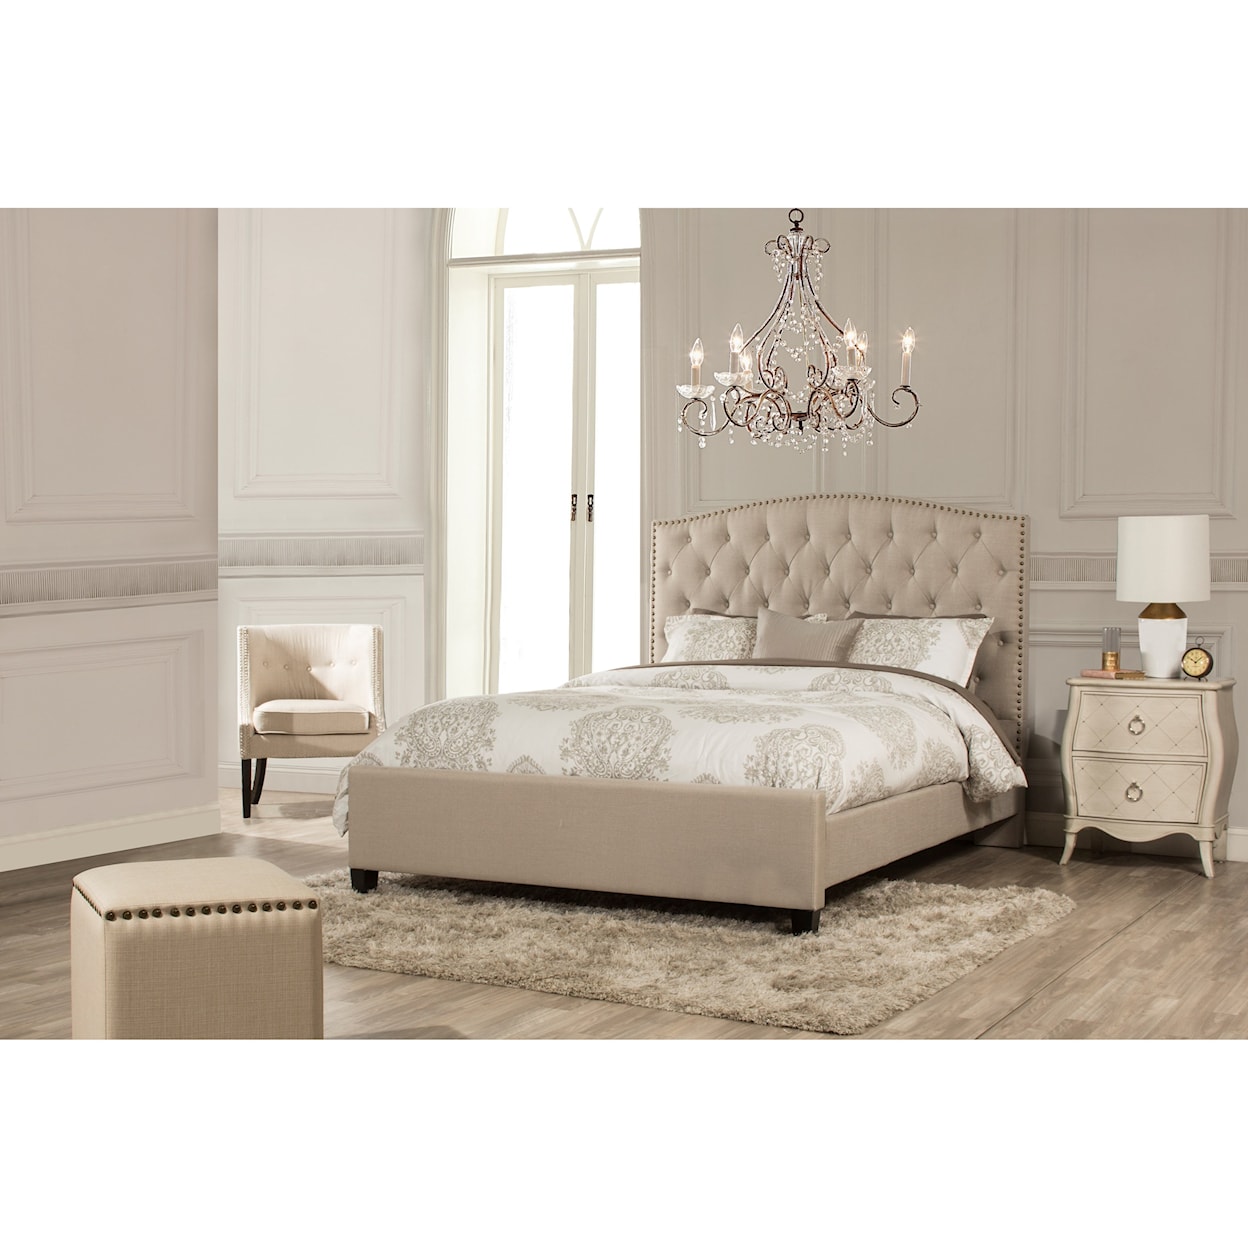 Hillsdale Lila King Upholstered Bed